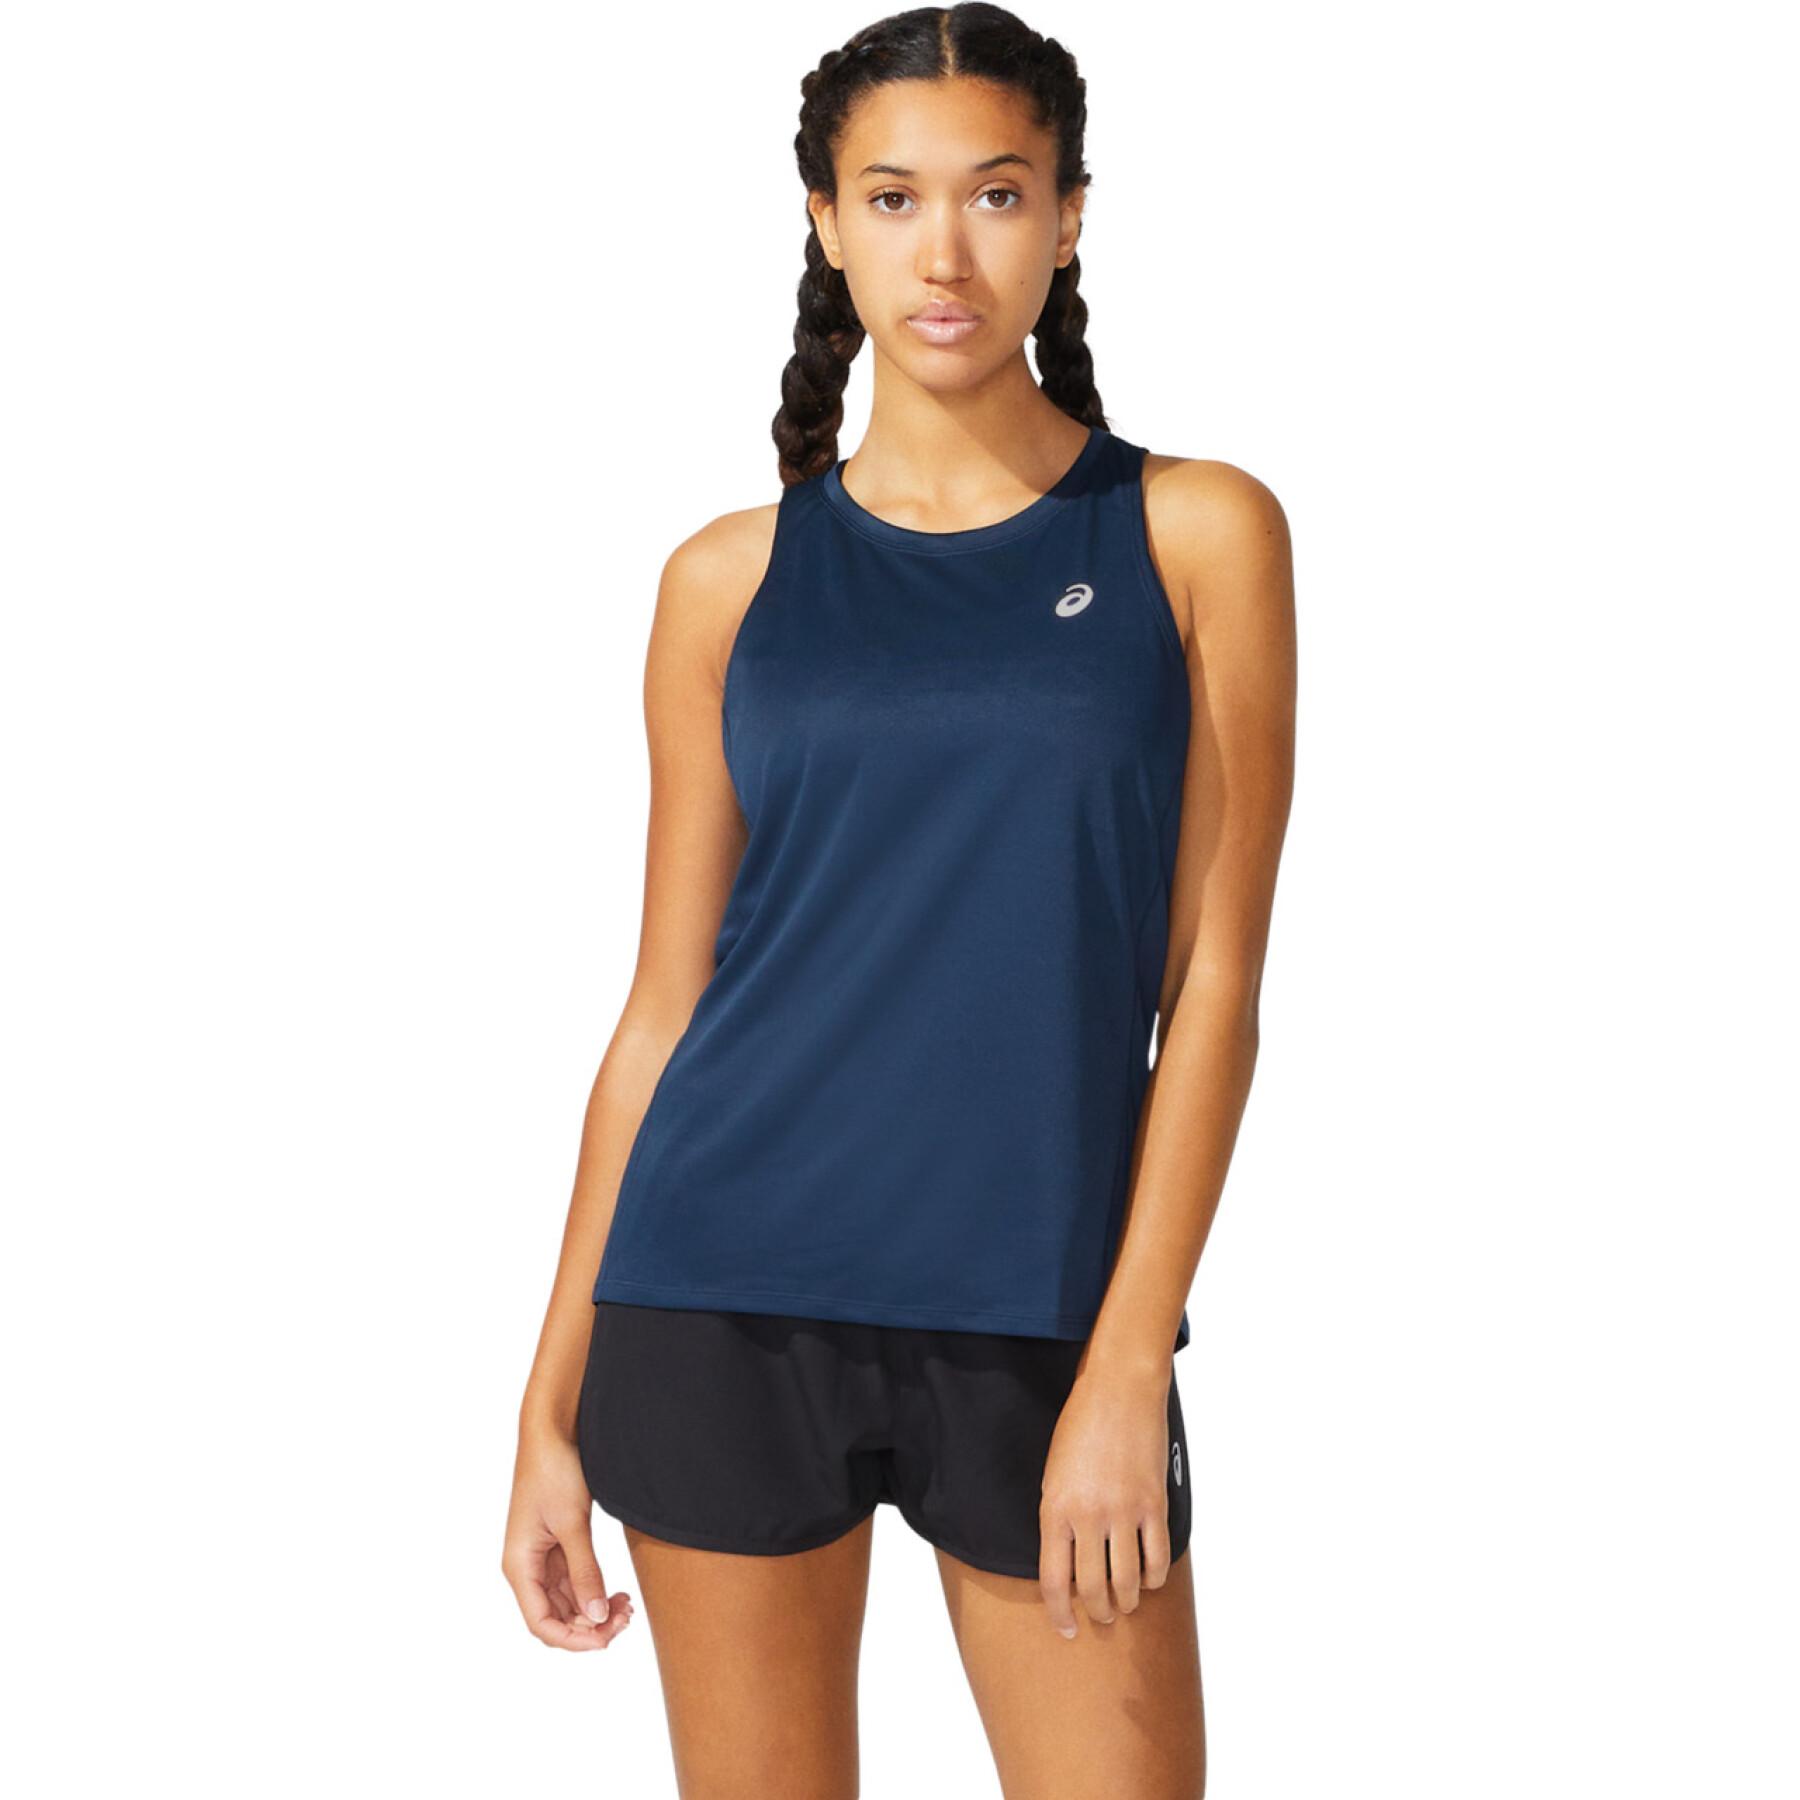 t-shirts Running - Core top Women\'s Asics Jerseys textiles - - and tank Women\'s